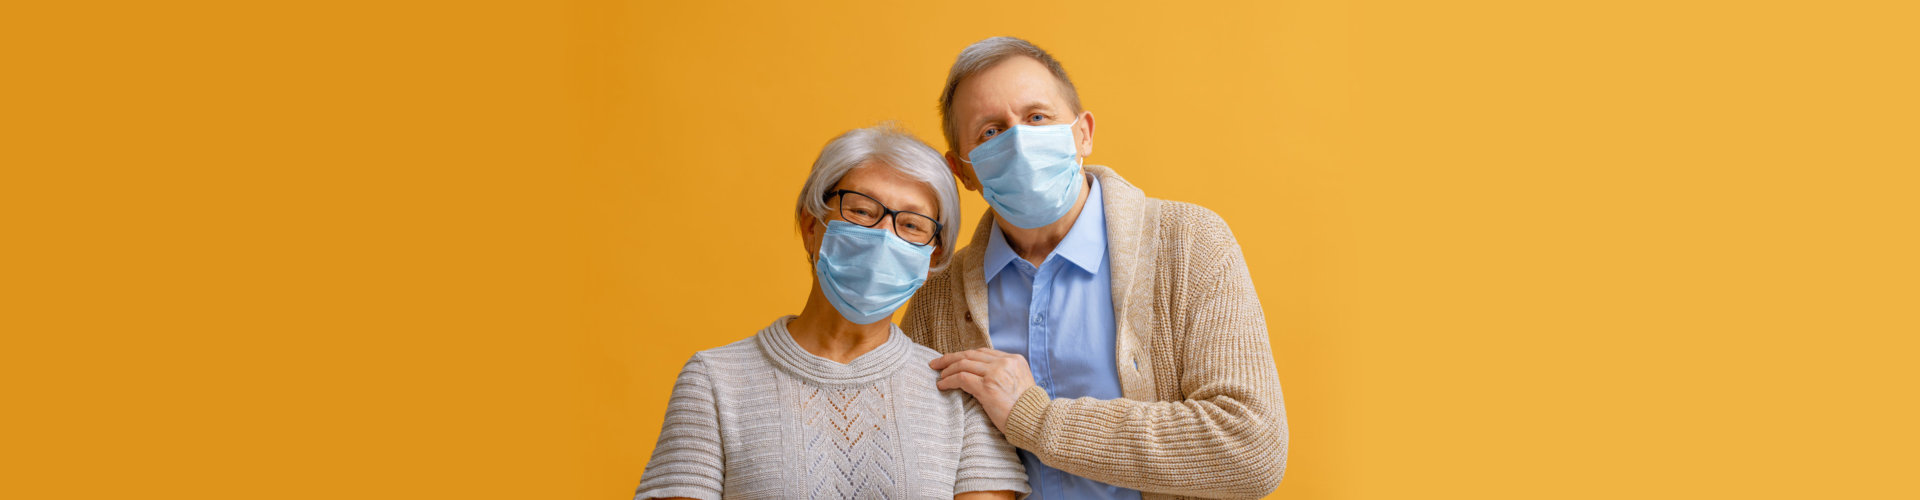 Senior couple wearing facemask during coronavirus and flu outbreak